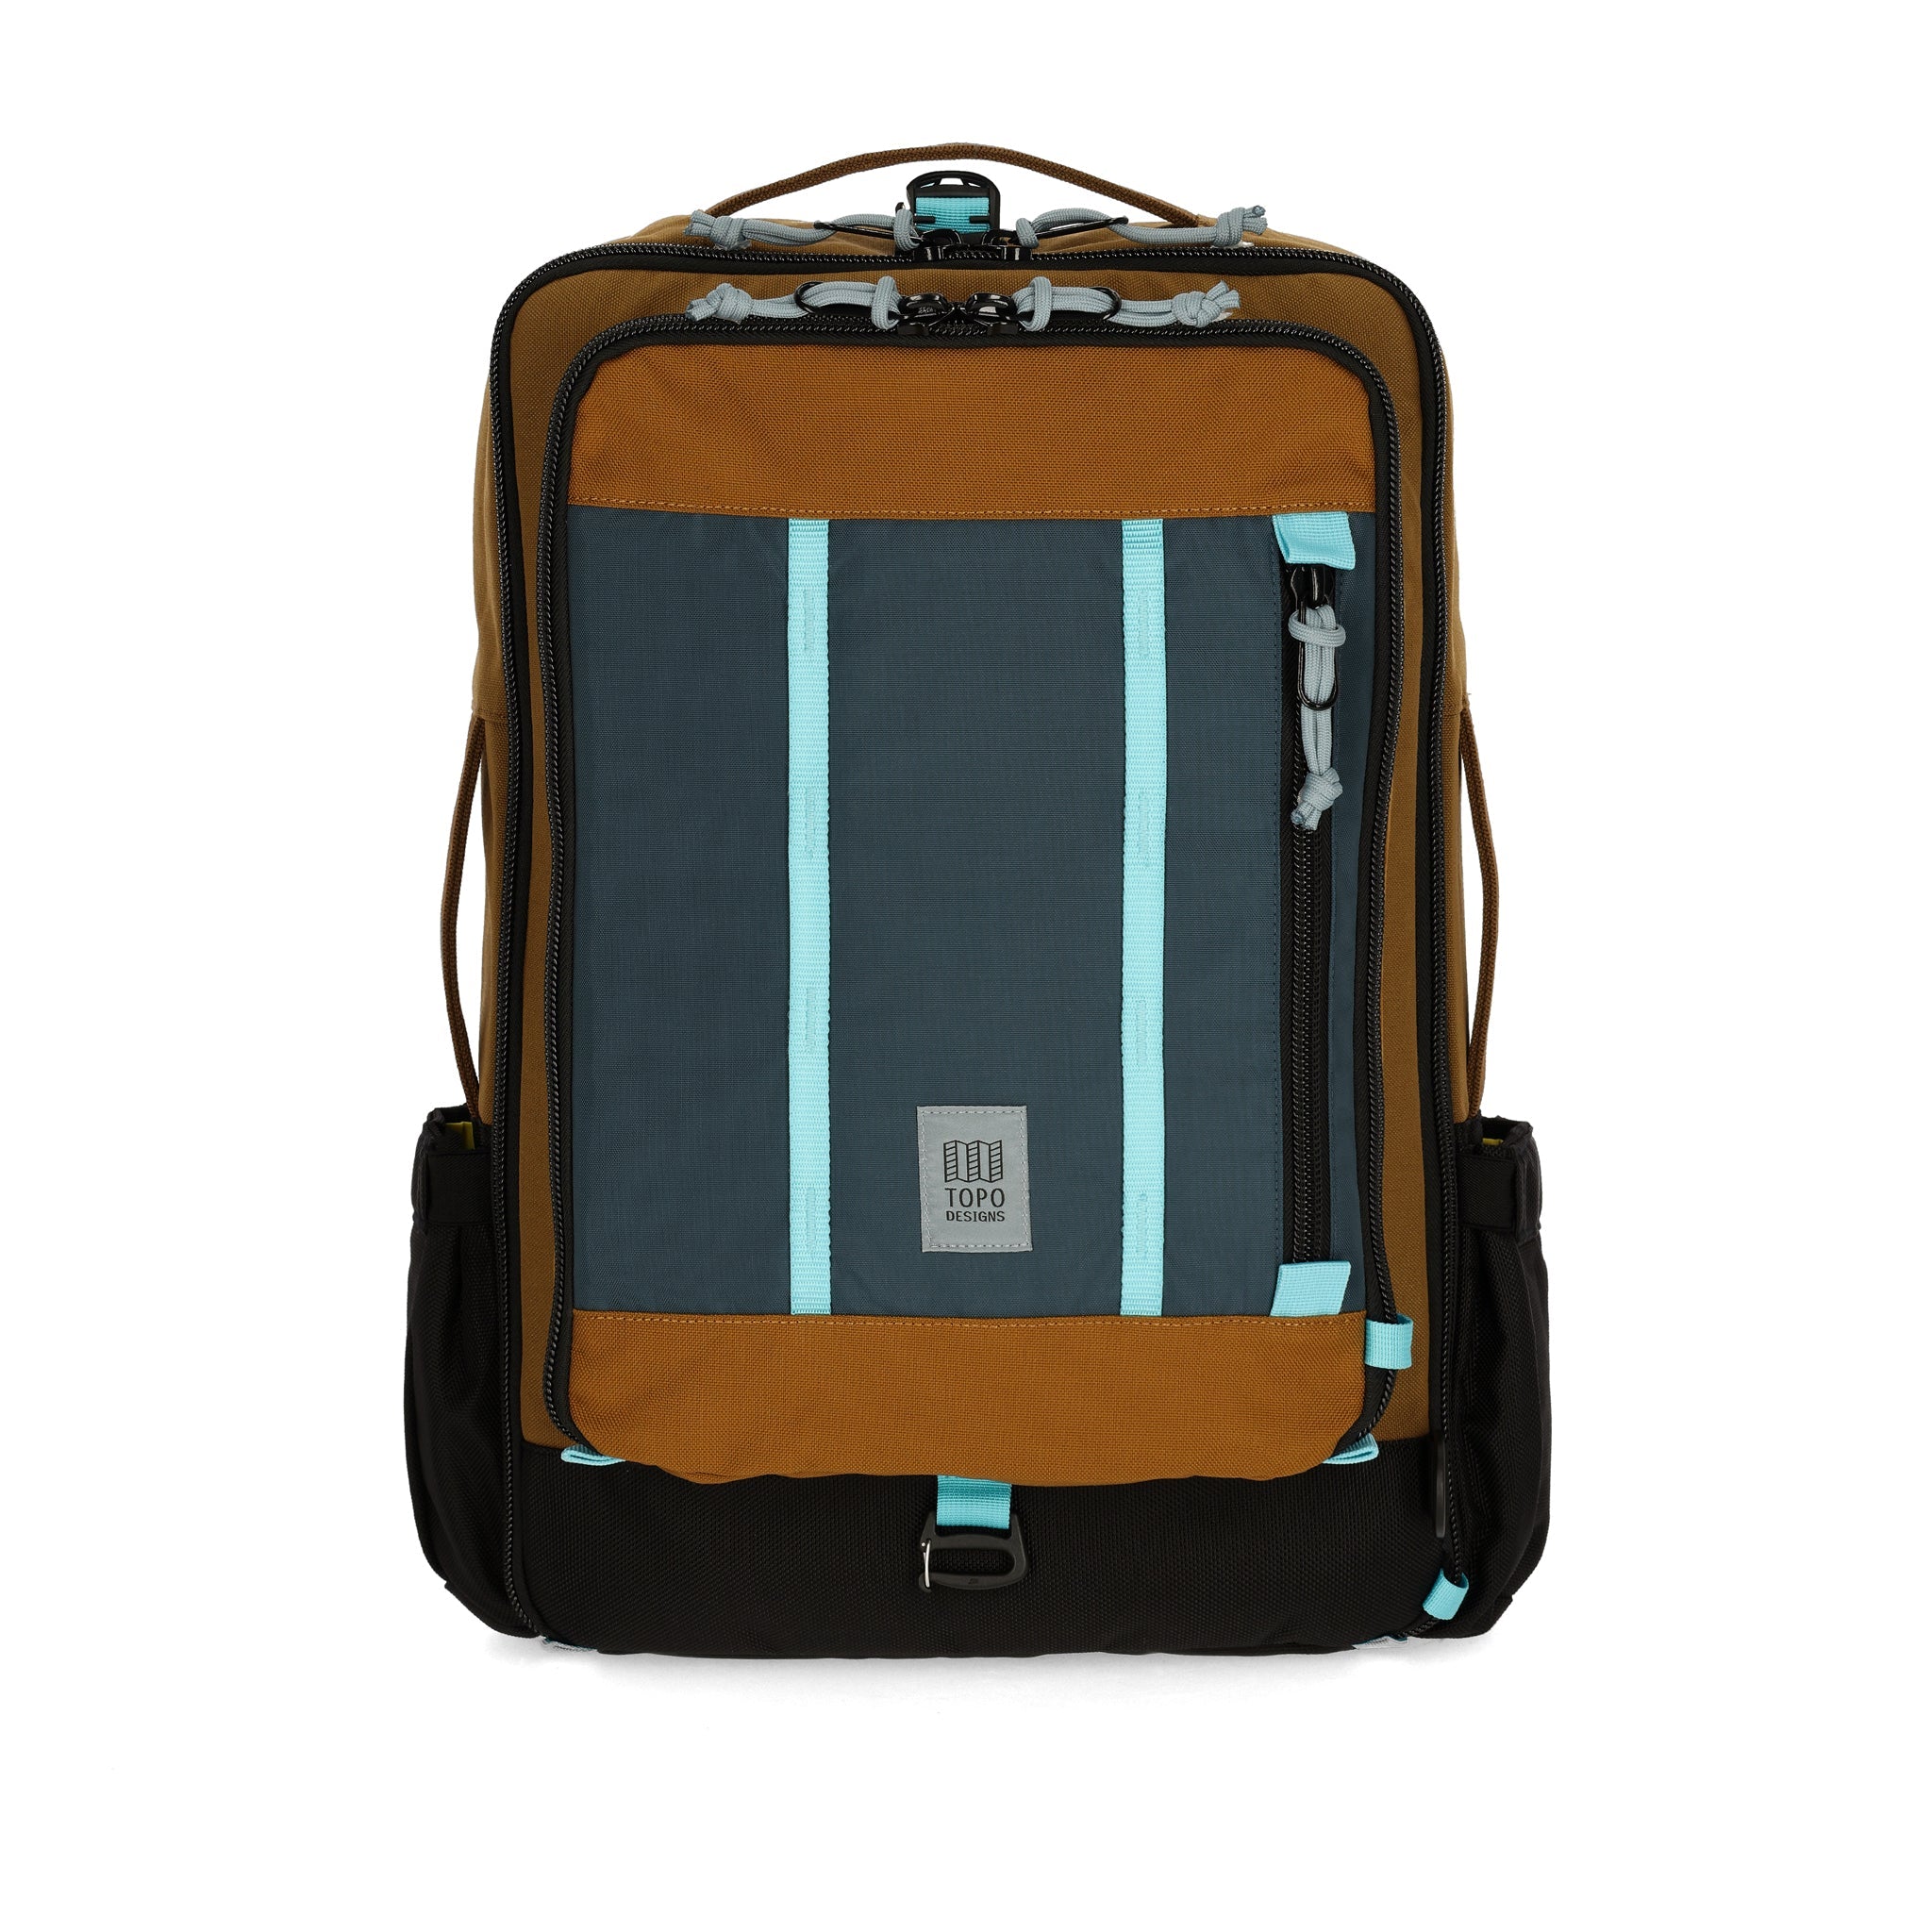 Global Travel Bag 30L | Topo Designs - Sale